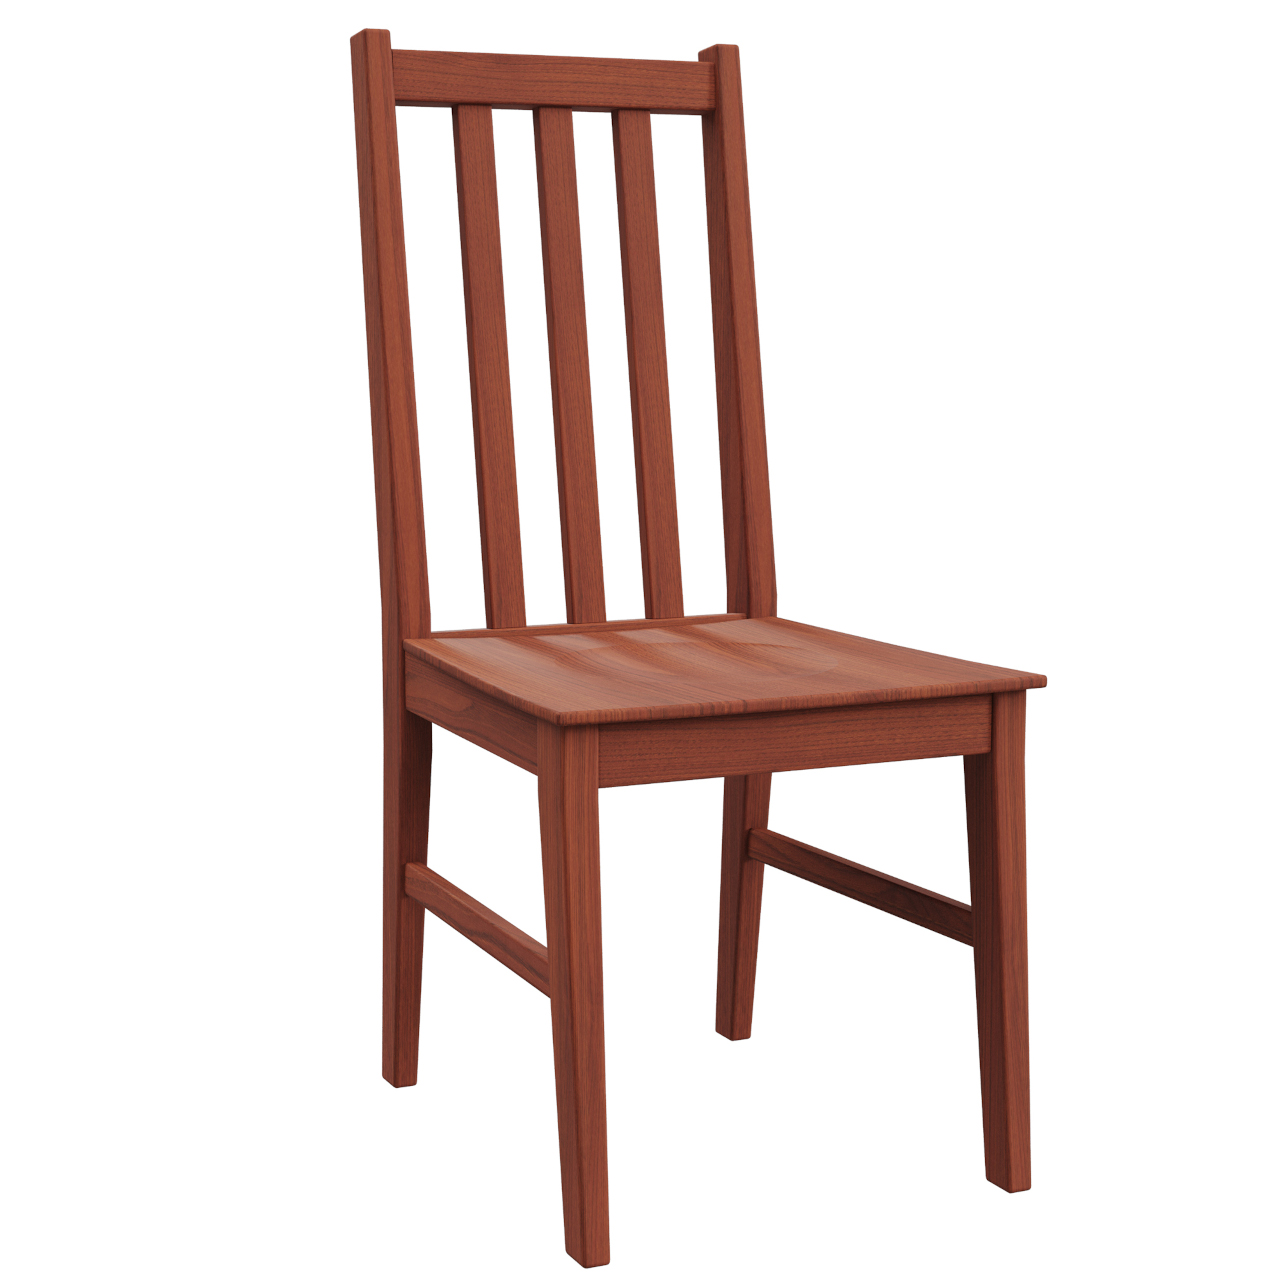 Chair BOS 10D chestnut